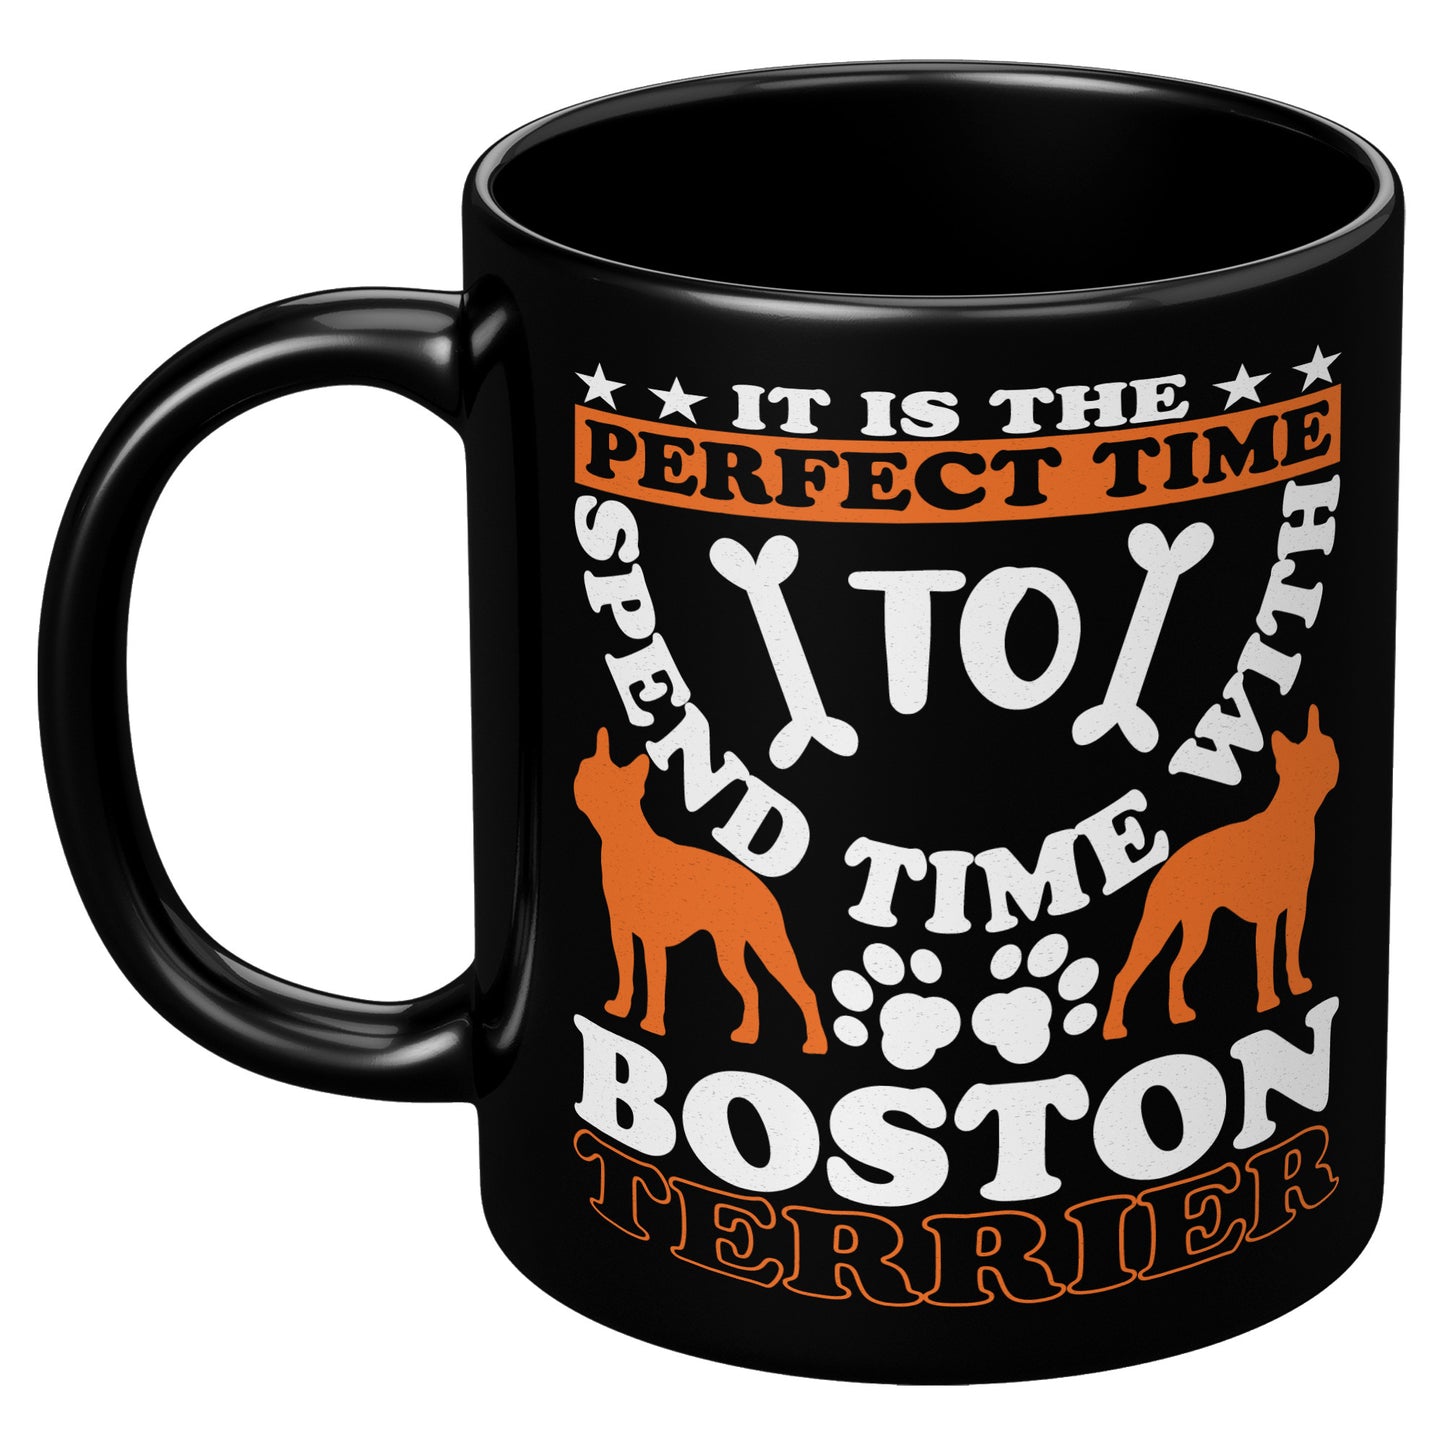 Pinocchio-Mug for Boston Terrier lovers